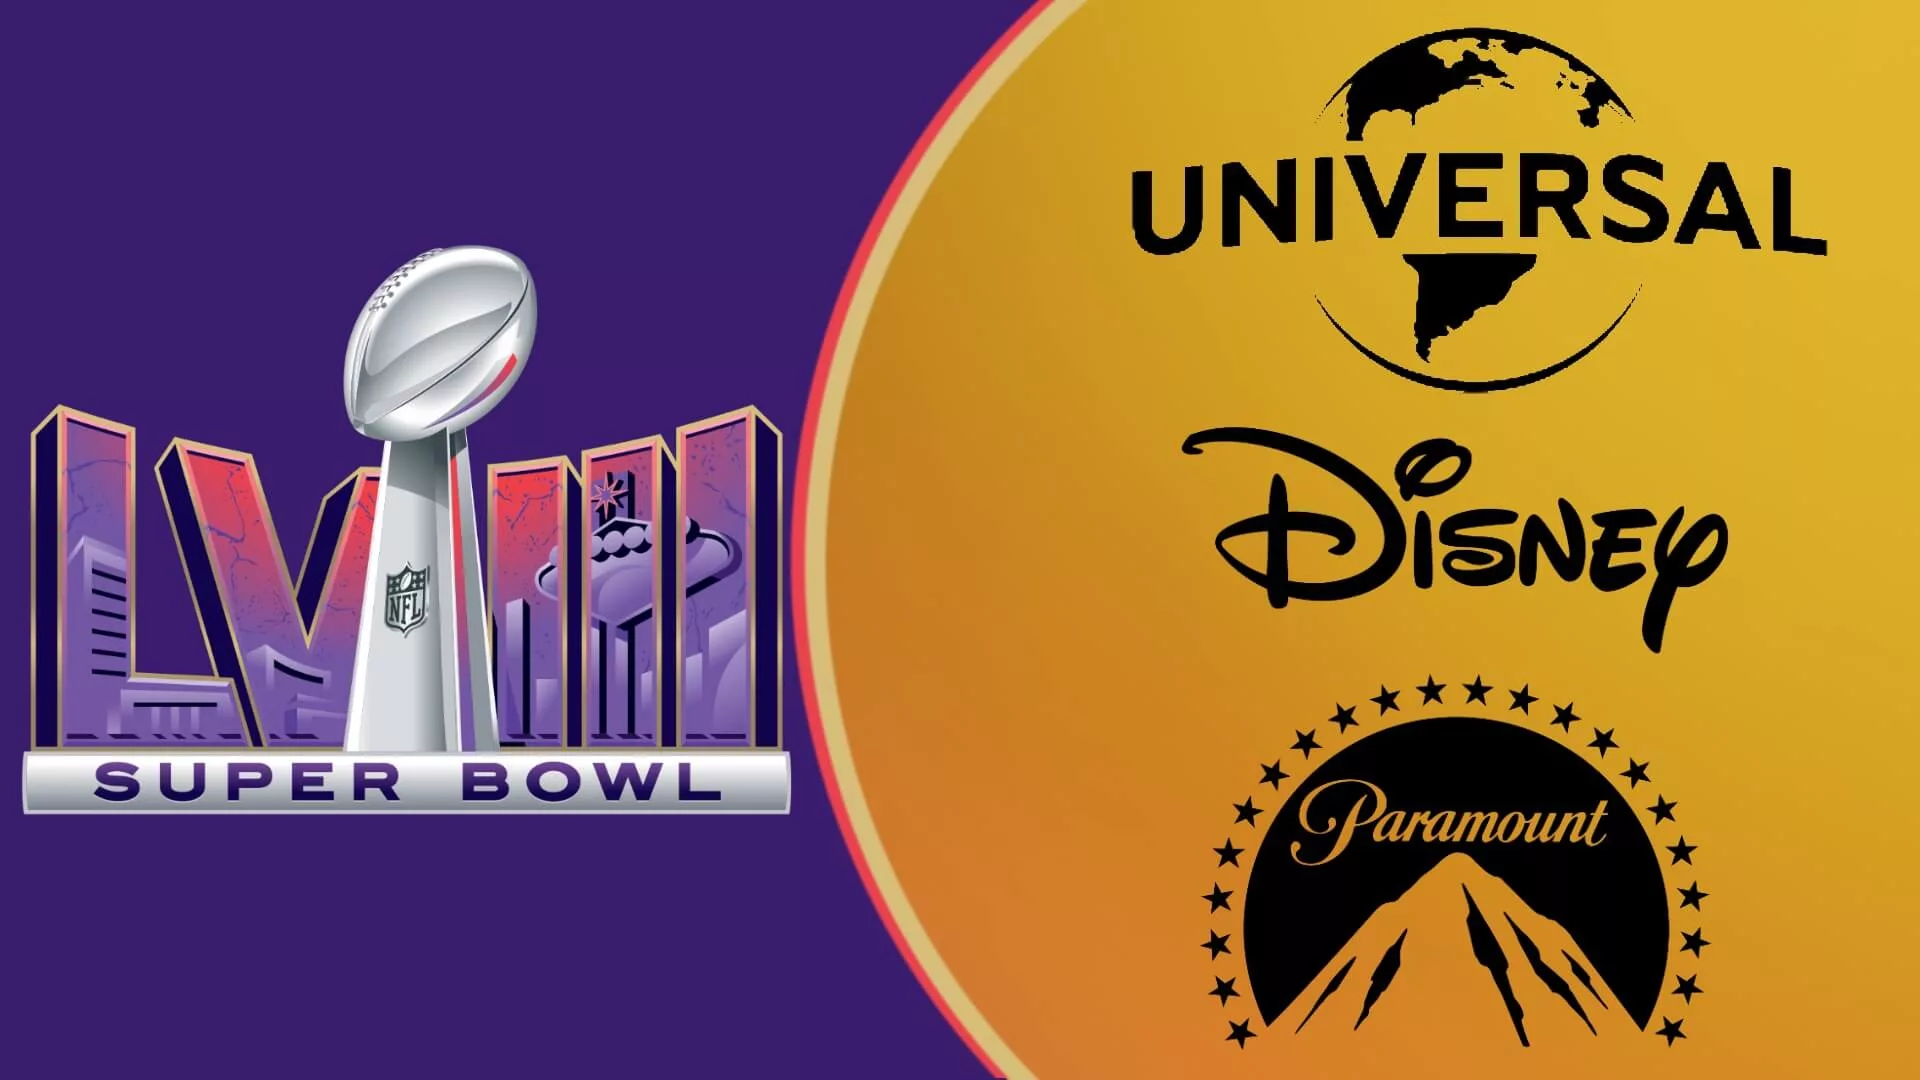 Disney, Paramount e Universal prometem agitar o Super Bowl